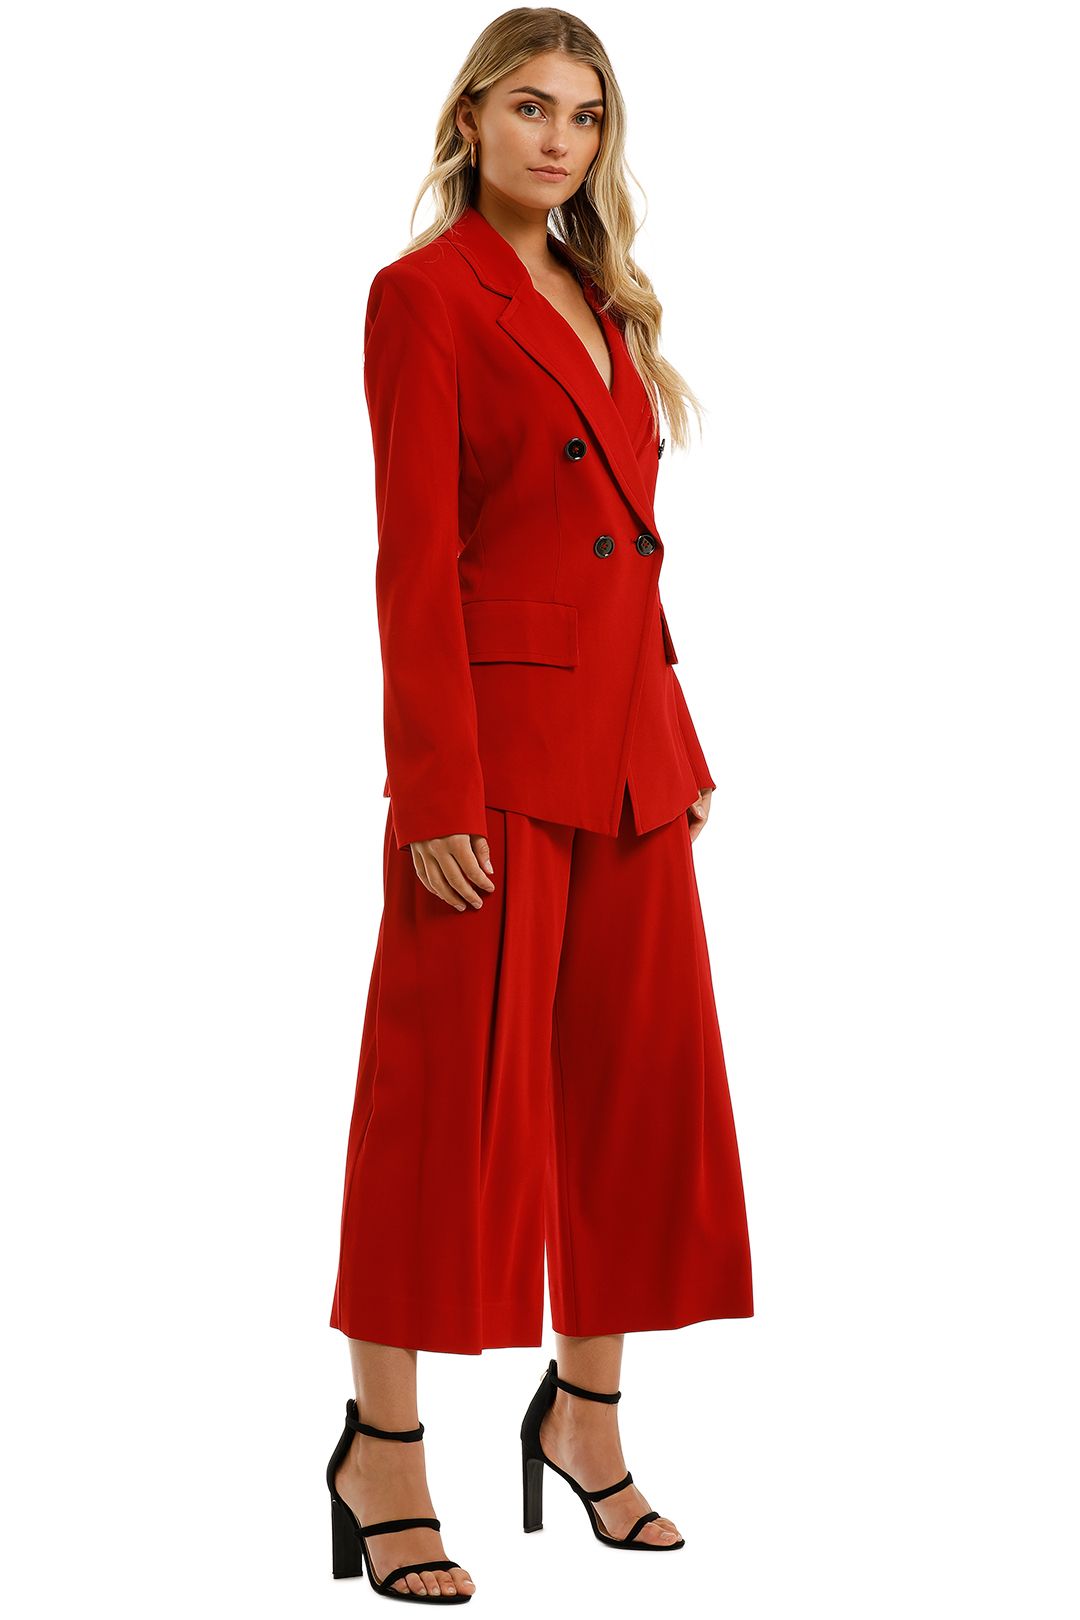 https://imageb.gc-static.com/media/catalog/product/g/i/ginger-and-smart-equinox-jacket-and-pant-set-scarlet-red-side_1.jpg